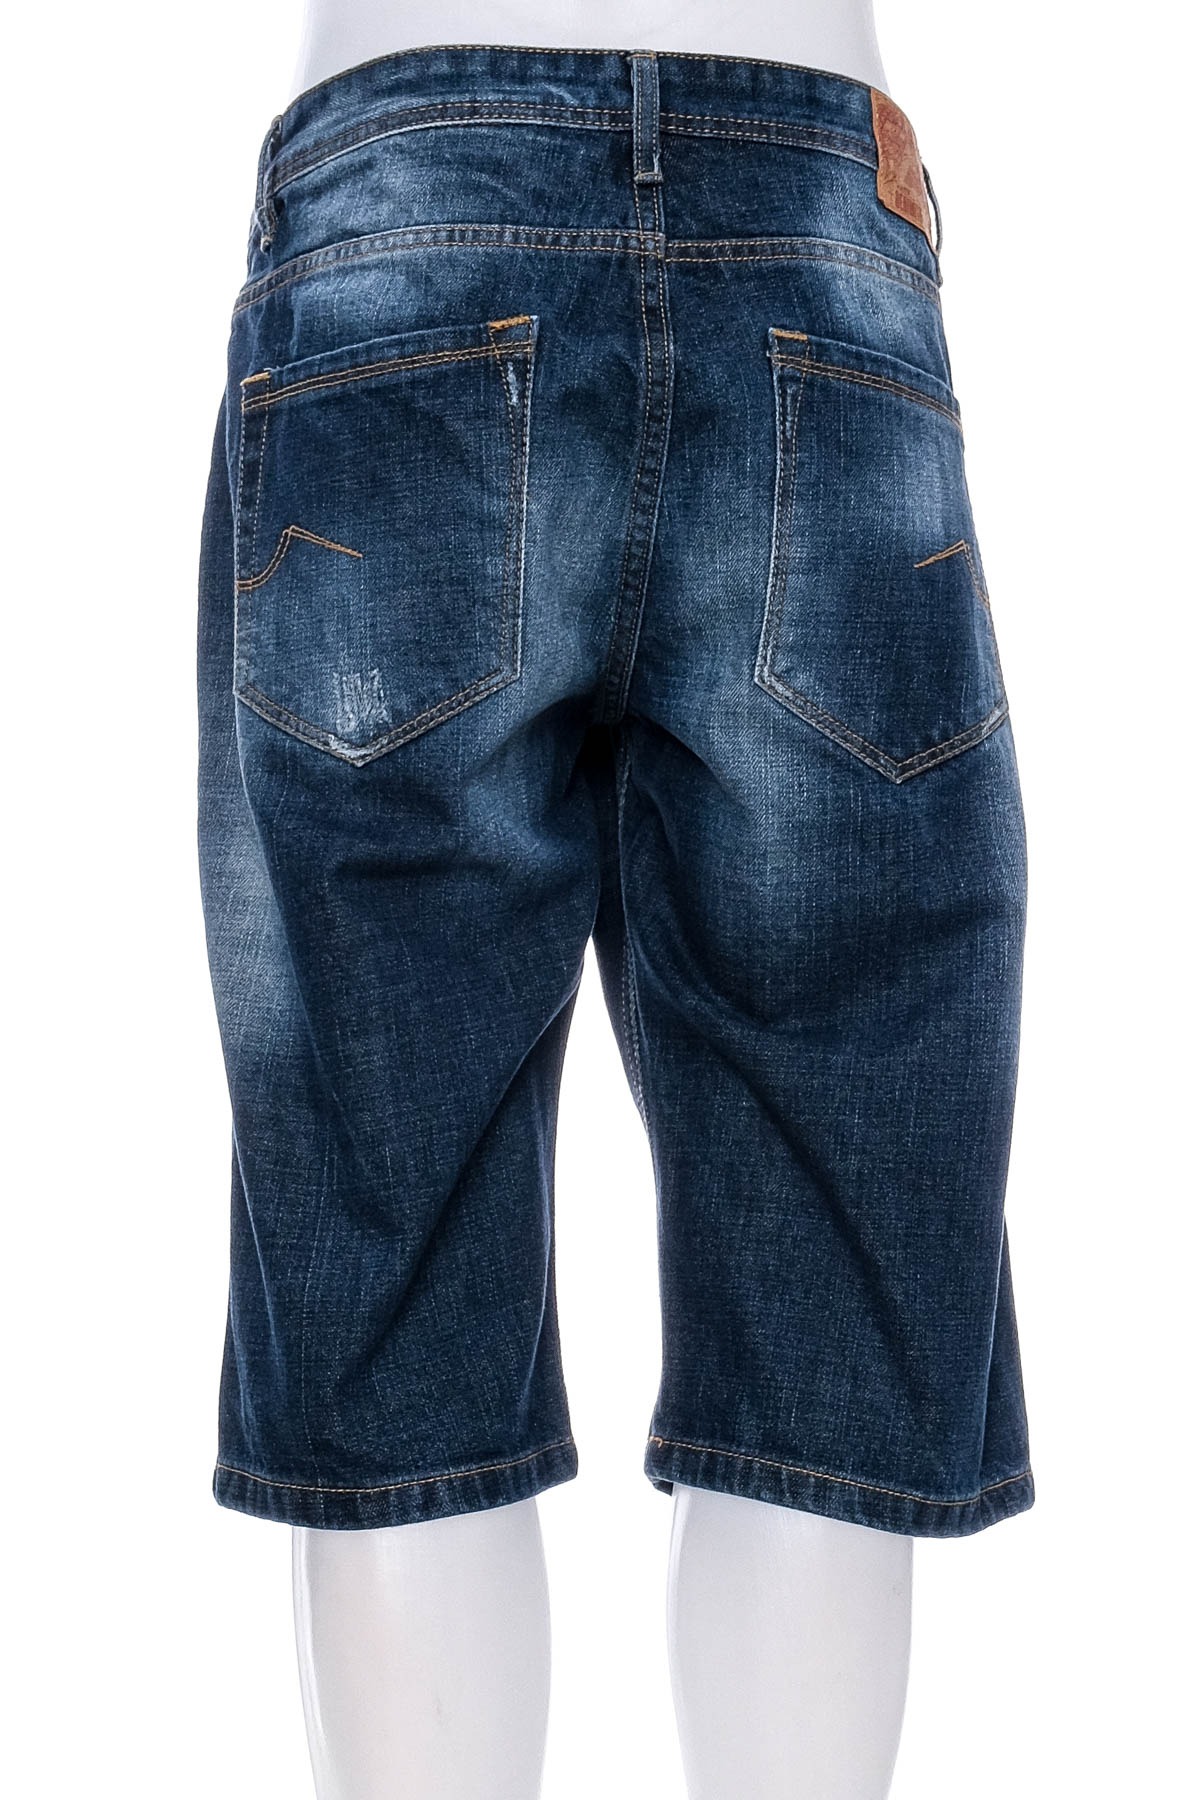 Men's shorts - CKH Denim - 1